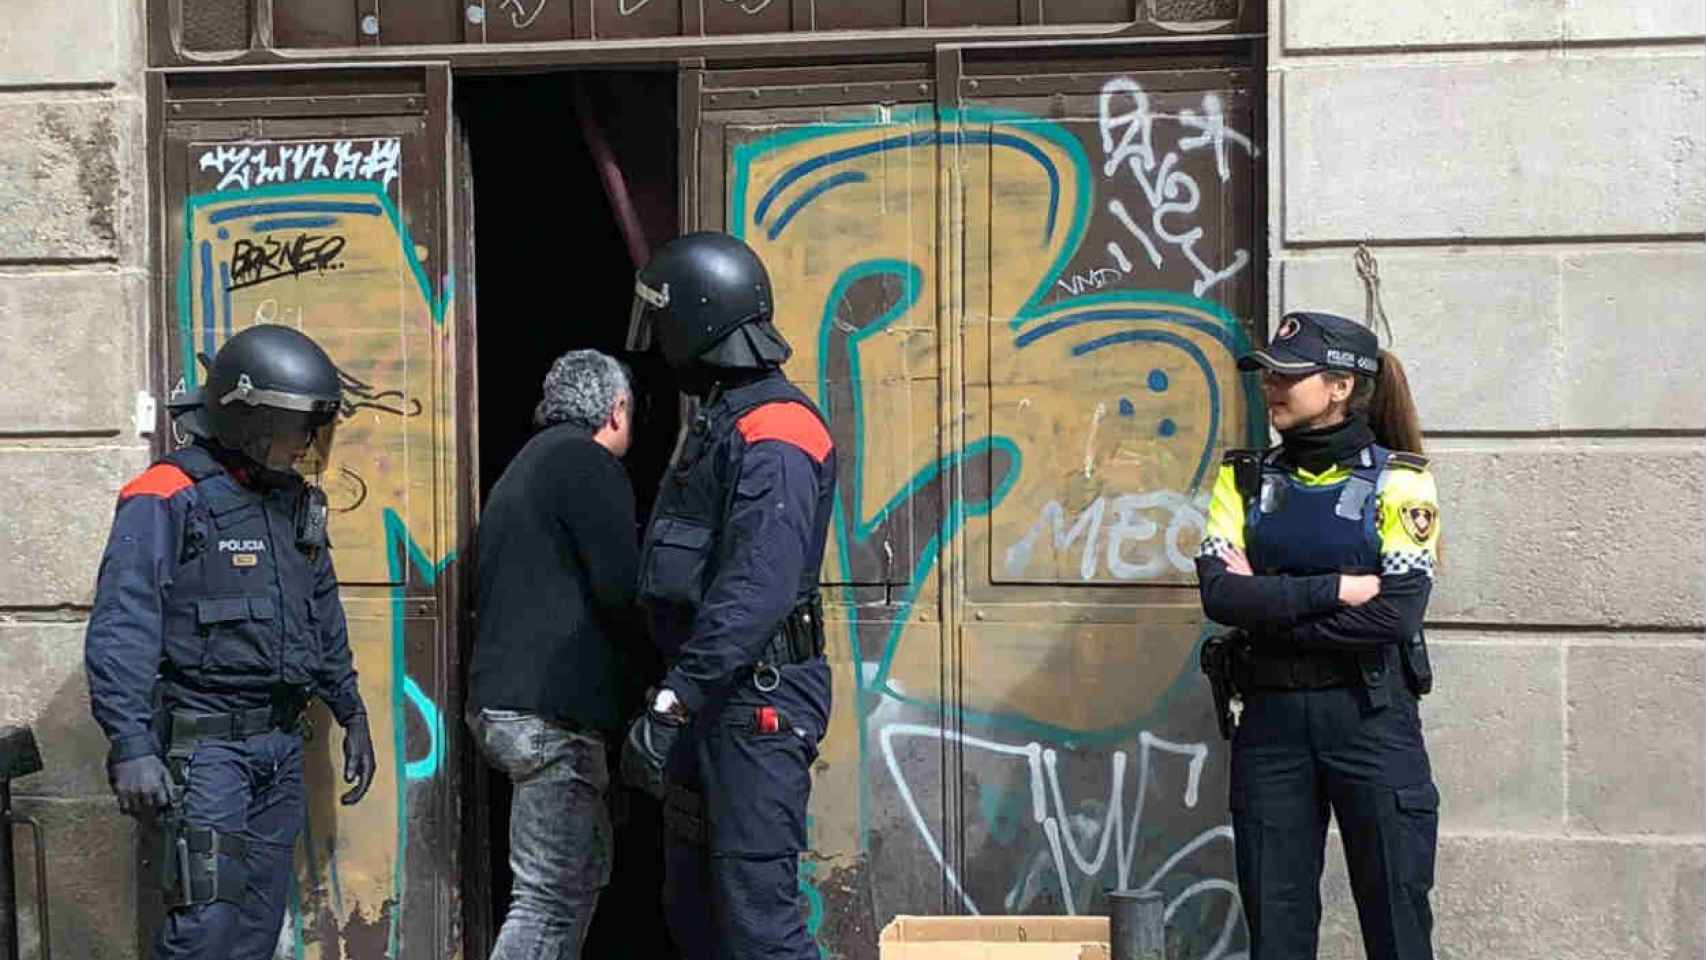 Los mossos entran en un narcolocal en el barrio Gòtic / Mossos d'Esquadra